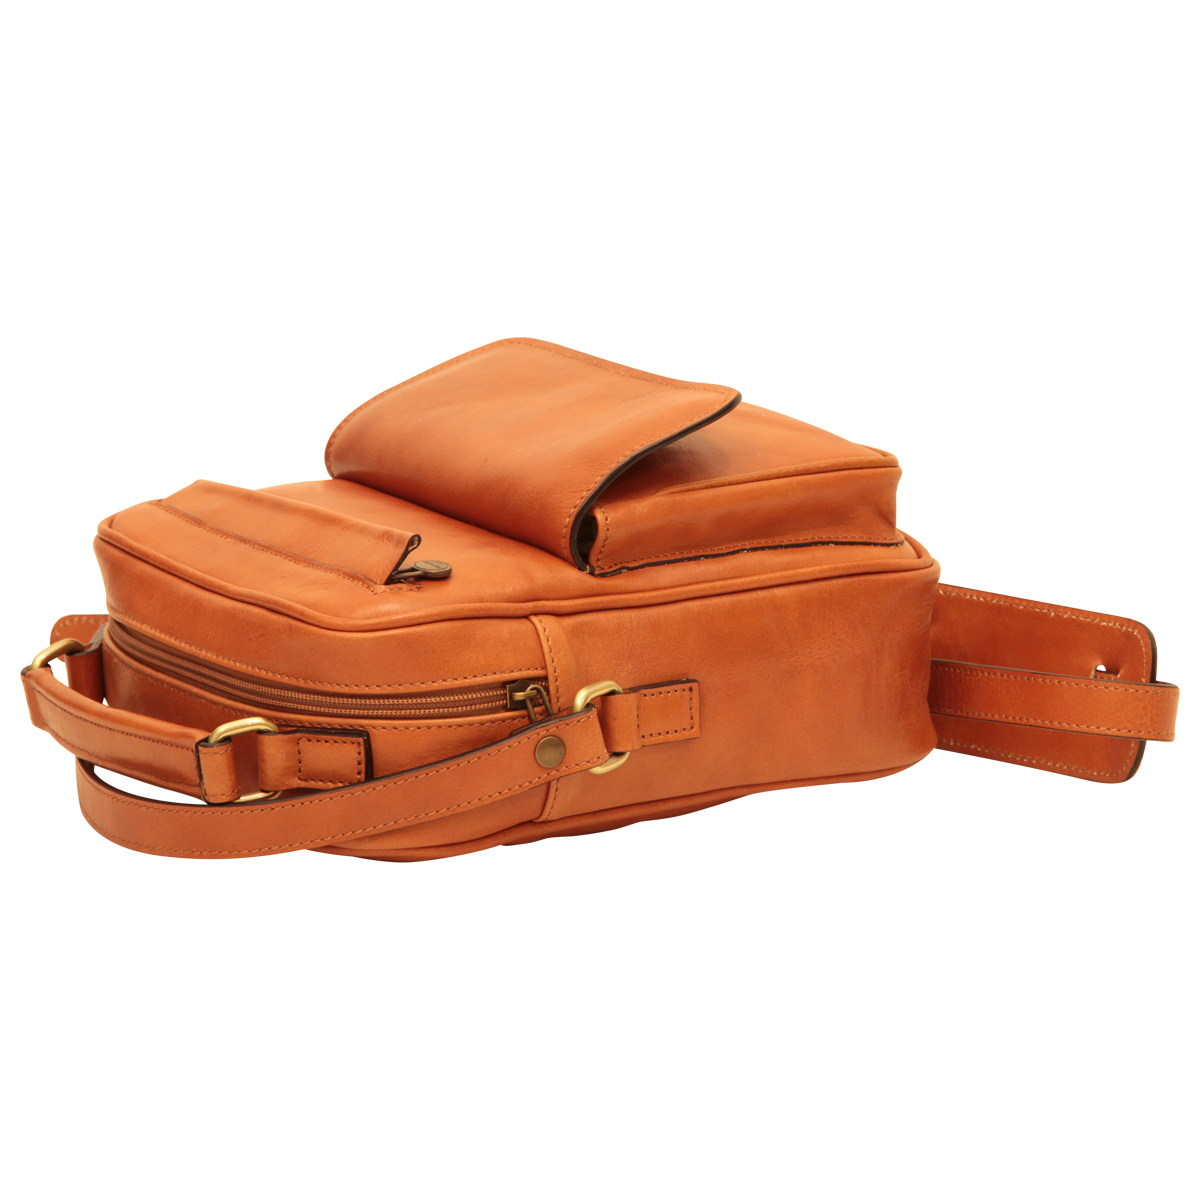 Leather Shoulder Bag with front pocket - Brown Colonial  | 056489CO US | Old Angler Firenze